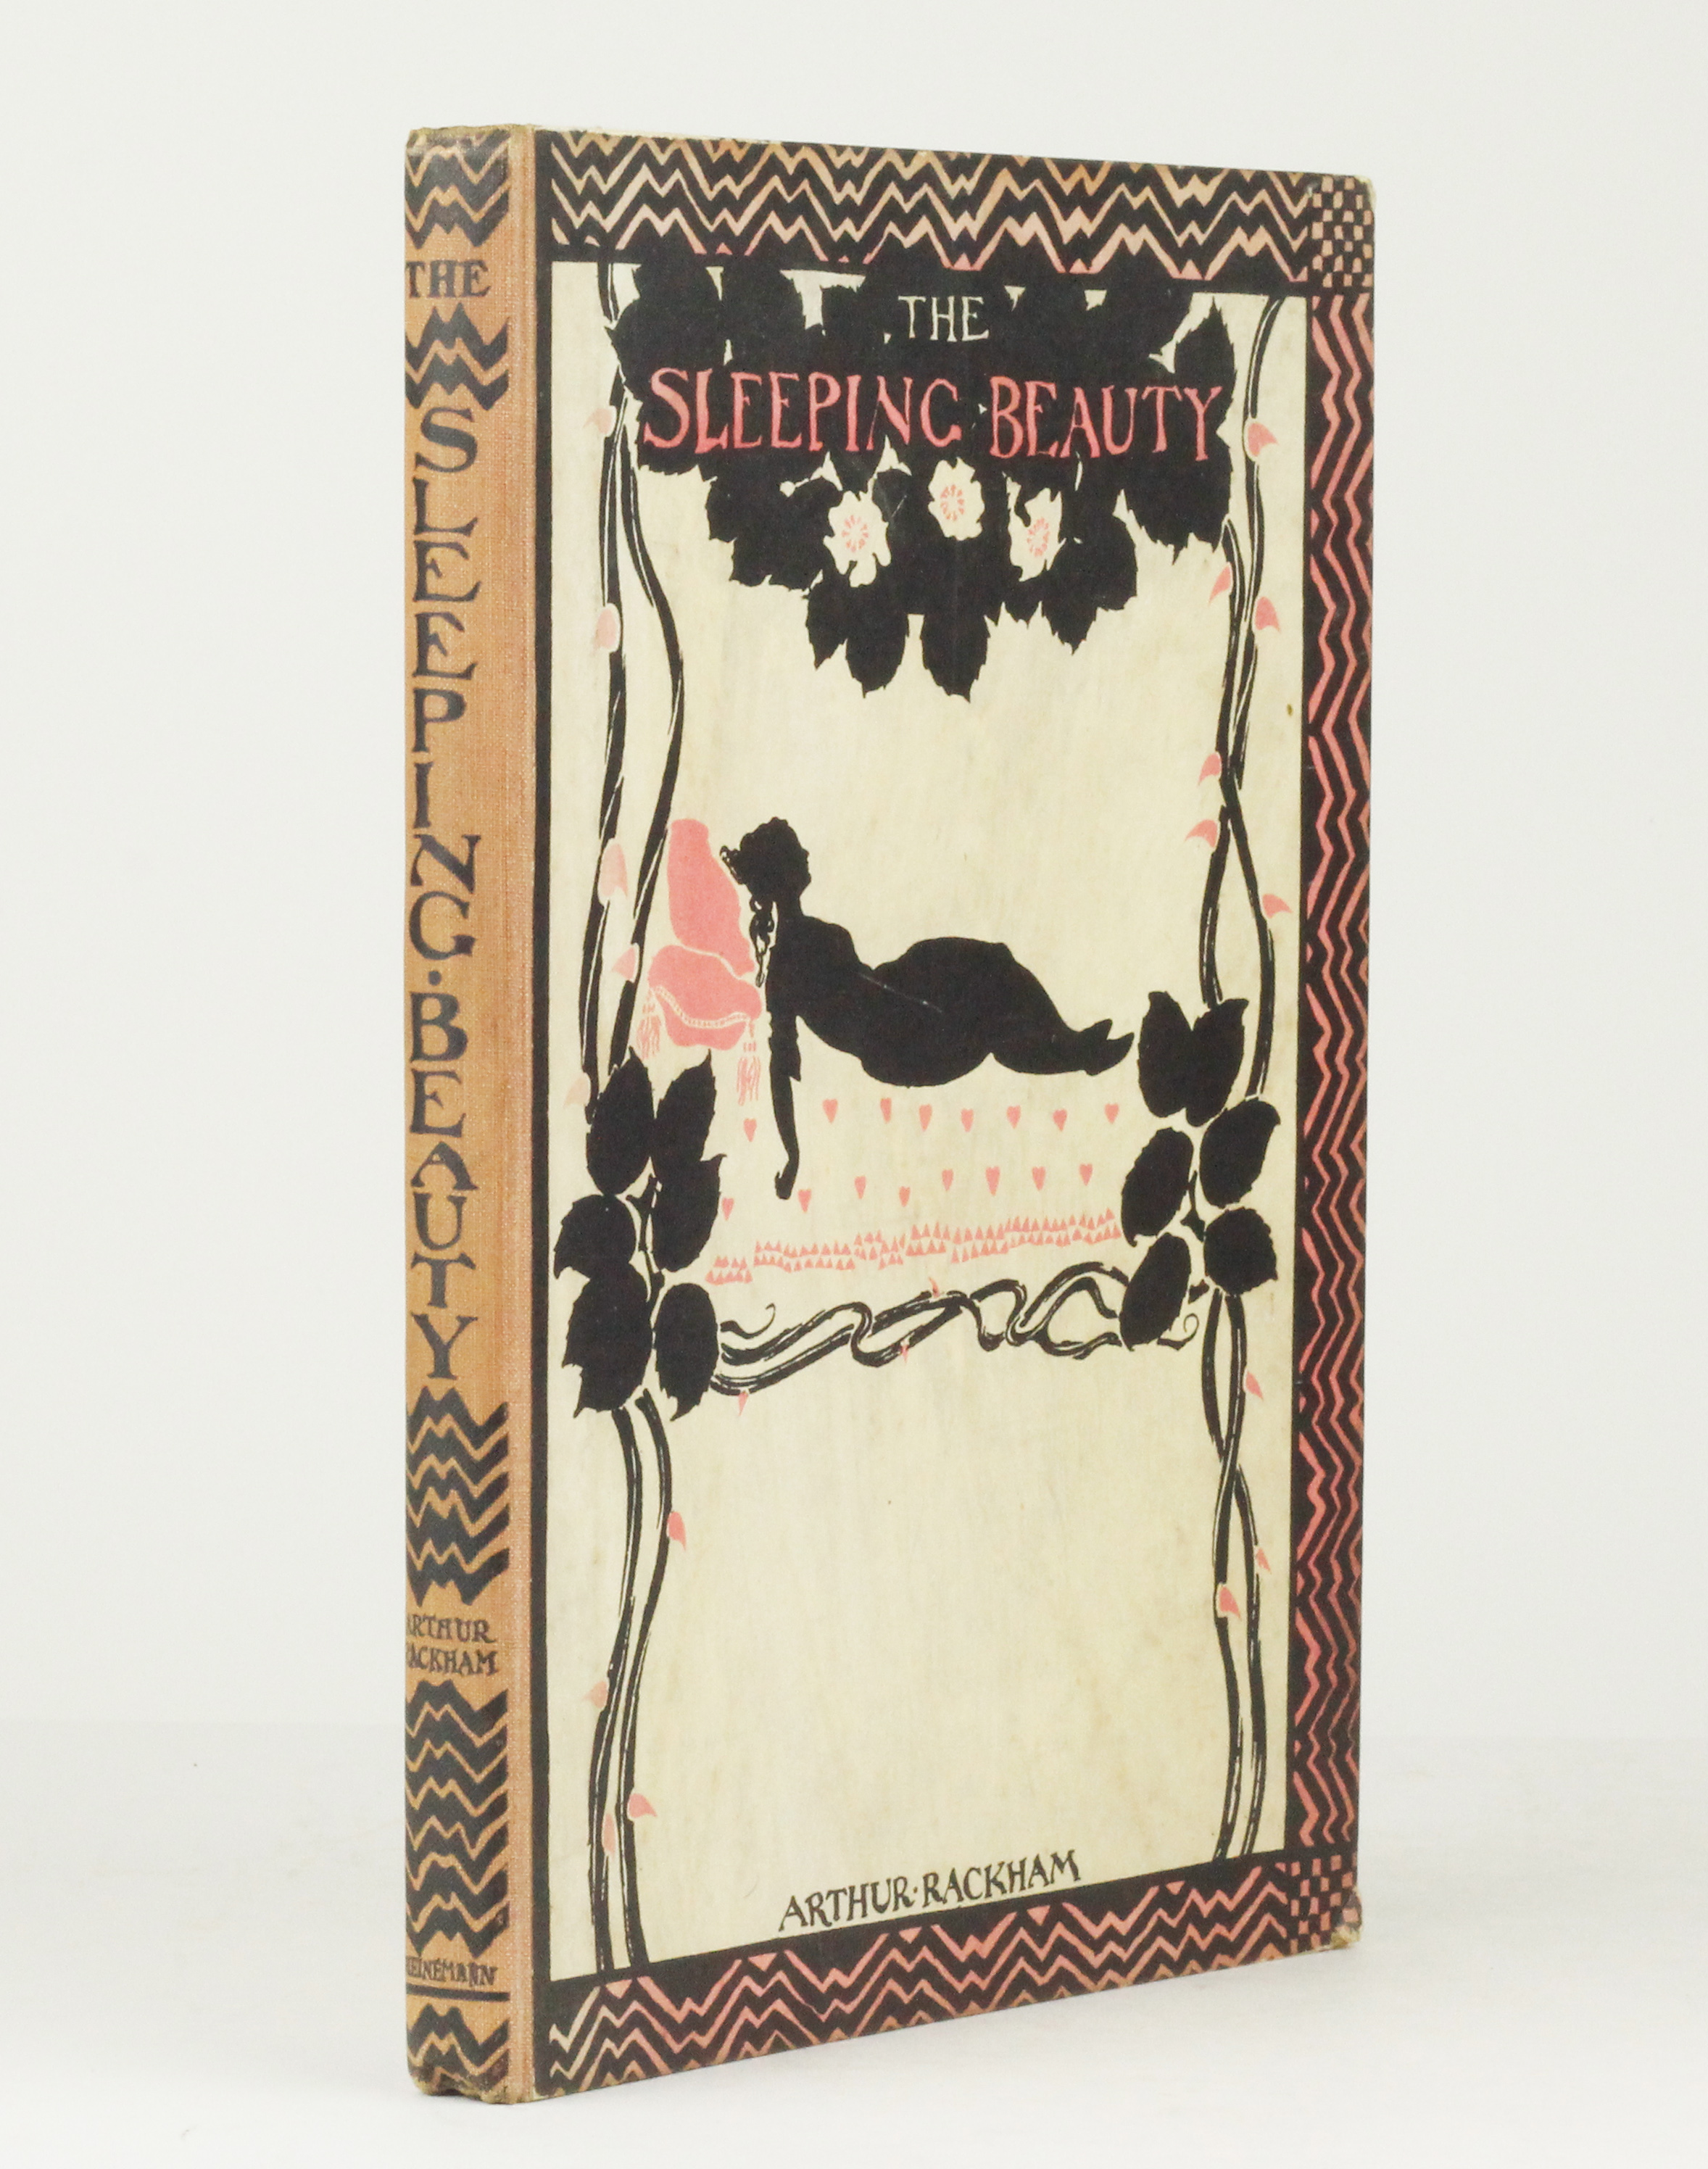 the sleeping beauty illustrated by arthur rackham